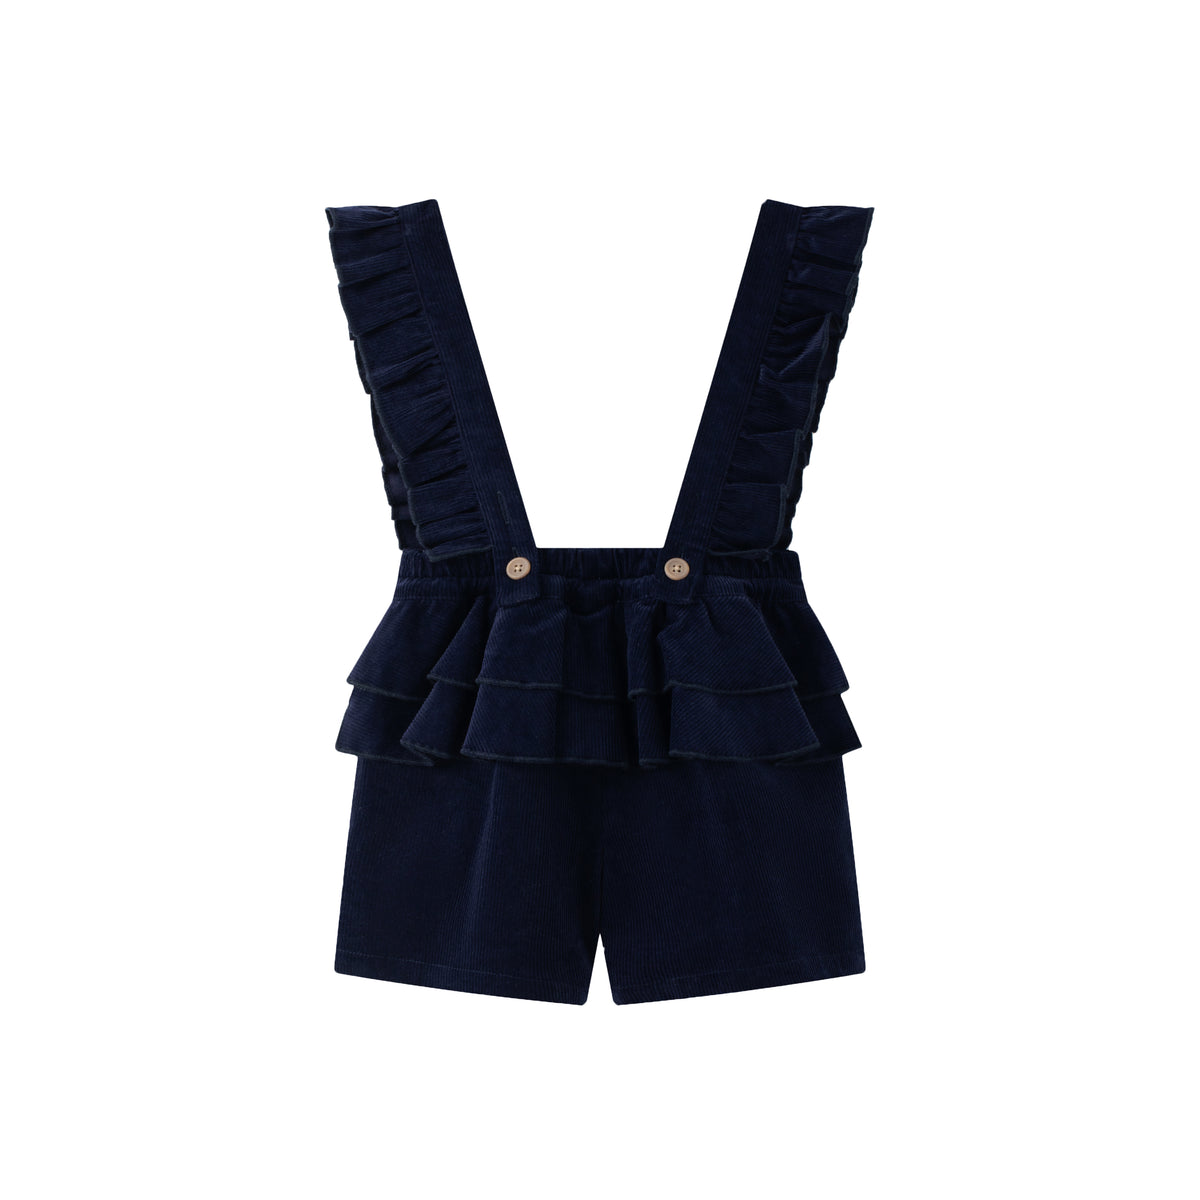 Vauva x Le Petit Prince - Girls Embroidered Corduroy Shorts product image back